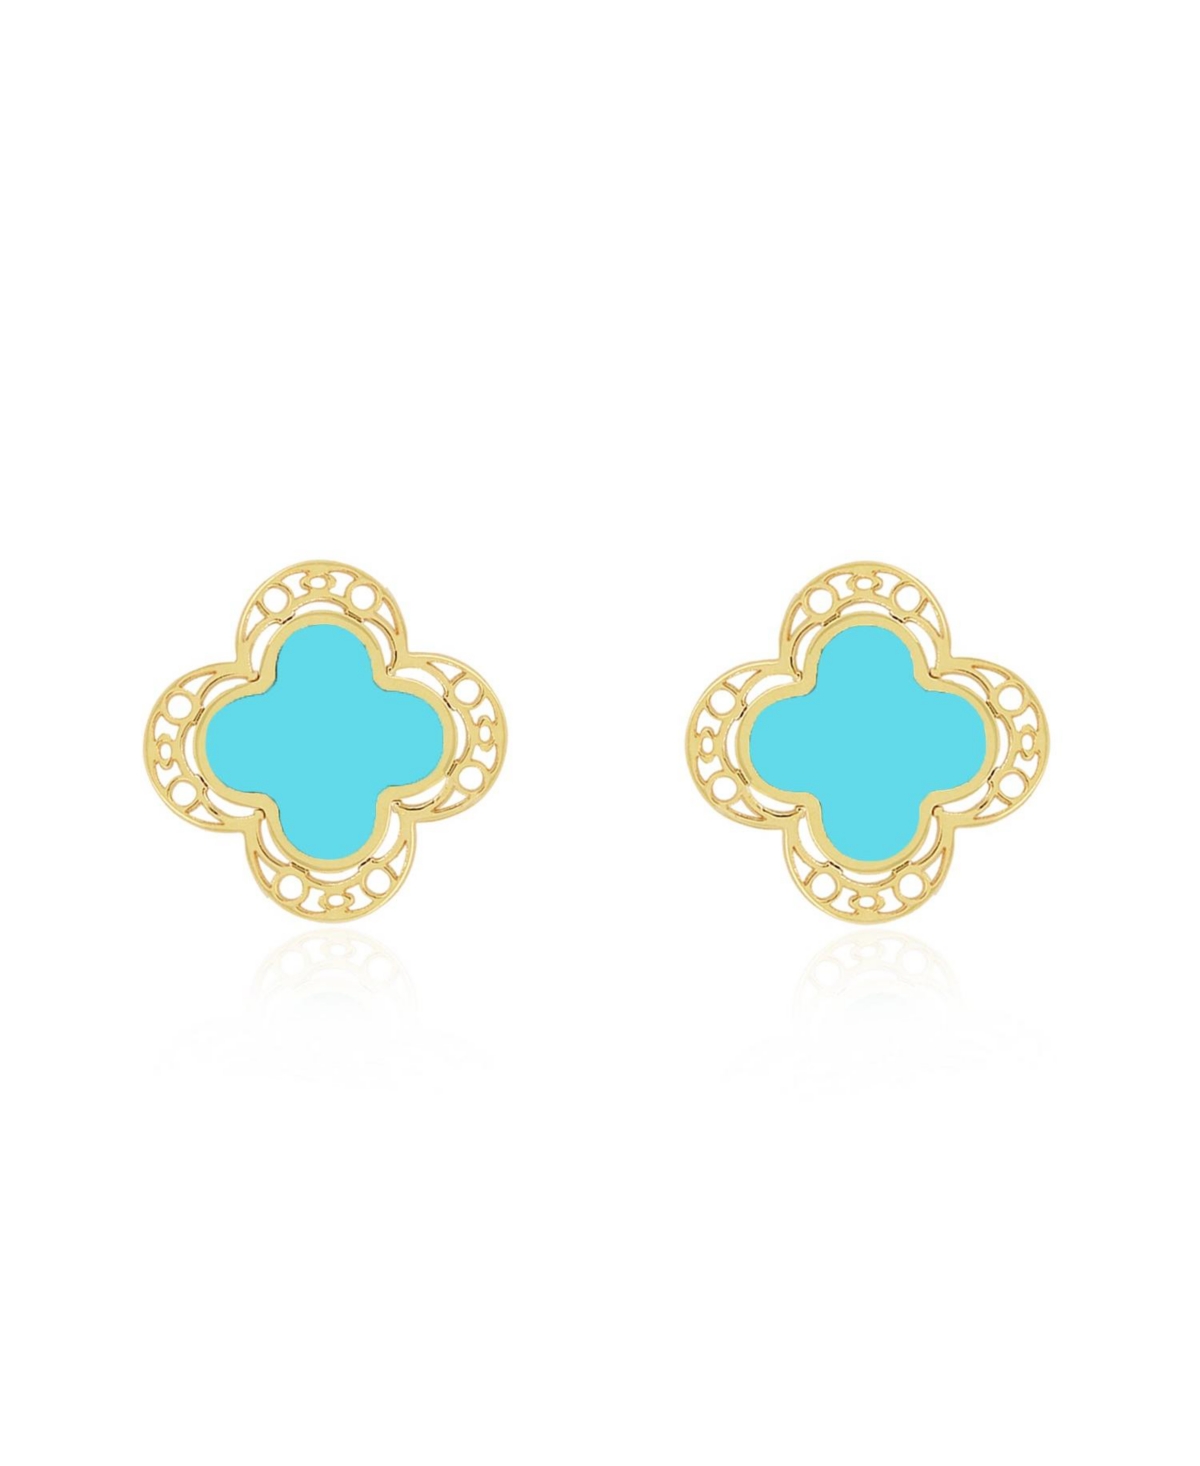 Turquoise Lace Clover Stud Earrings - Turquoise/aqua